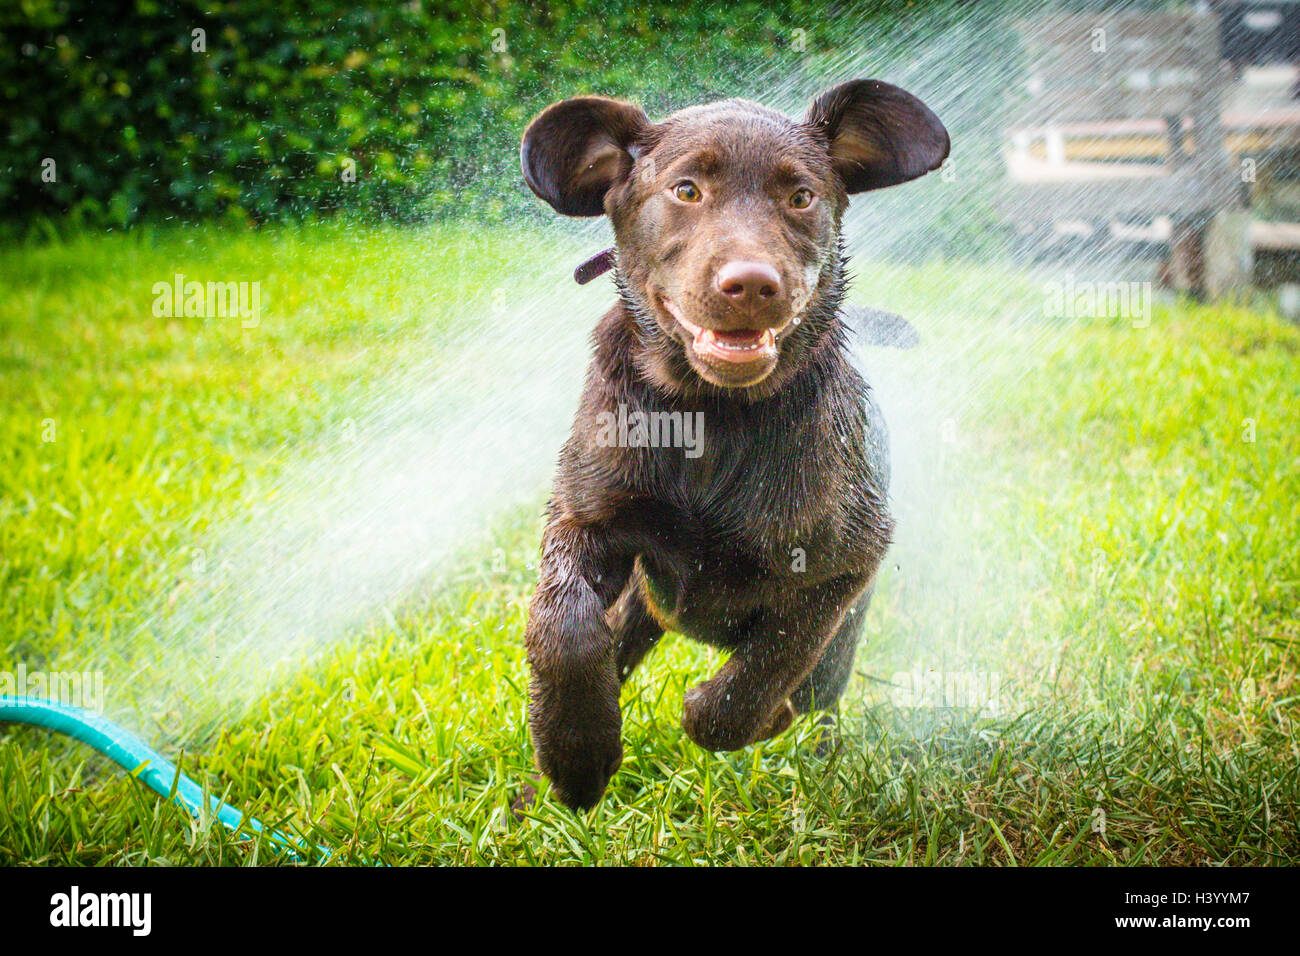 Labrador retriever puppy dog running through water sprinkler Banque D'Images